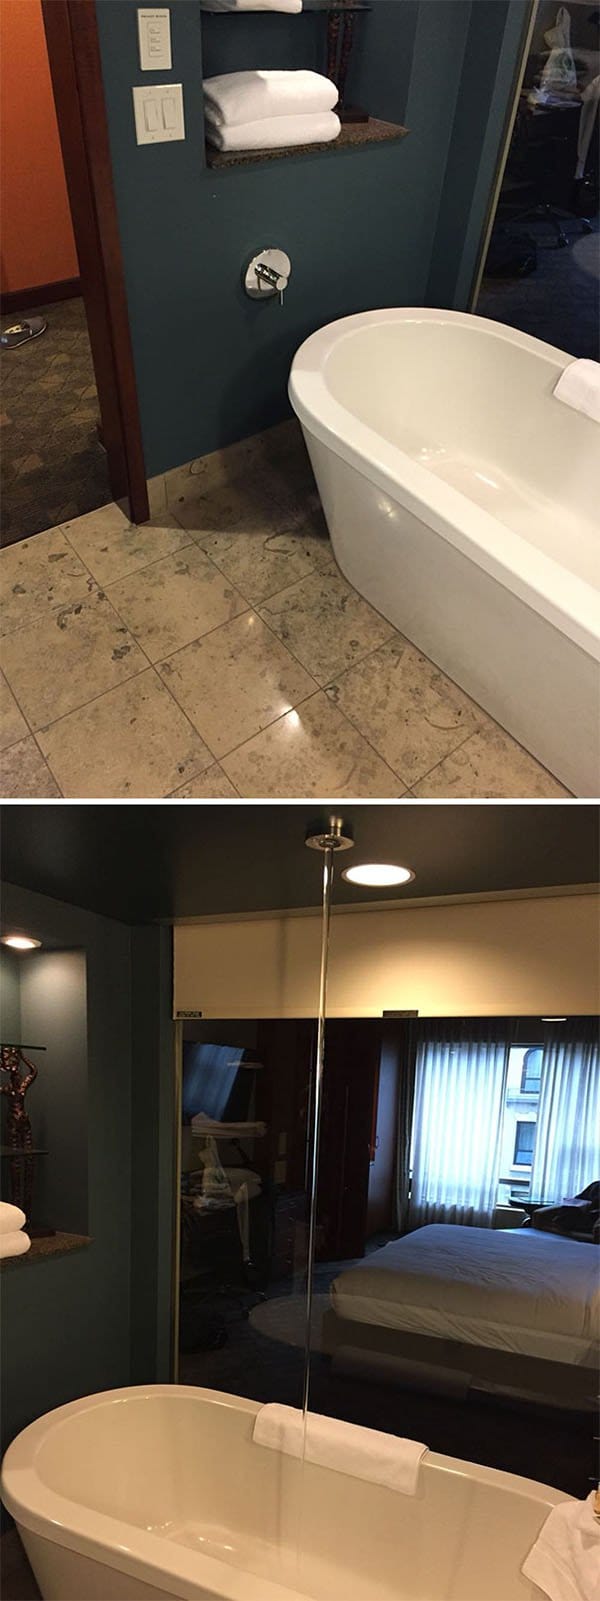 Genius Hotels bath fills from ceiling